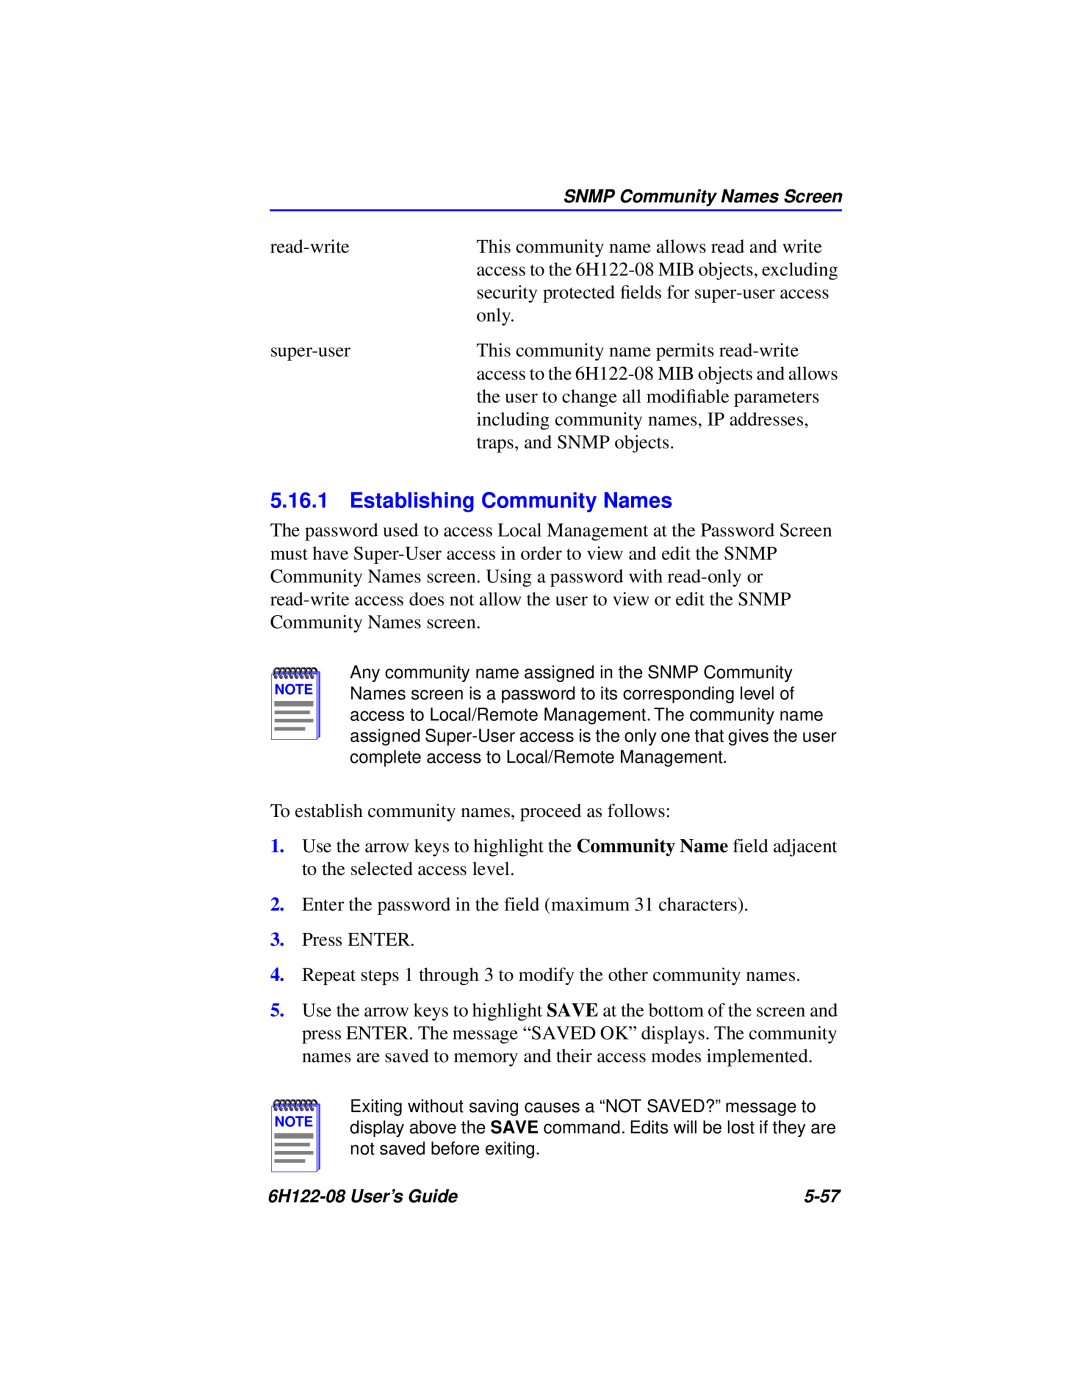 Cabletron Systems 6H122-08 manual Establishing Community Names 